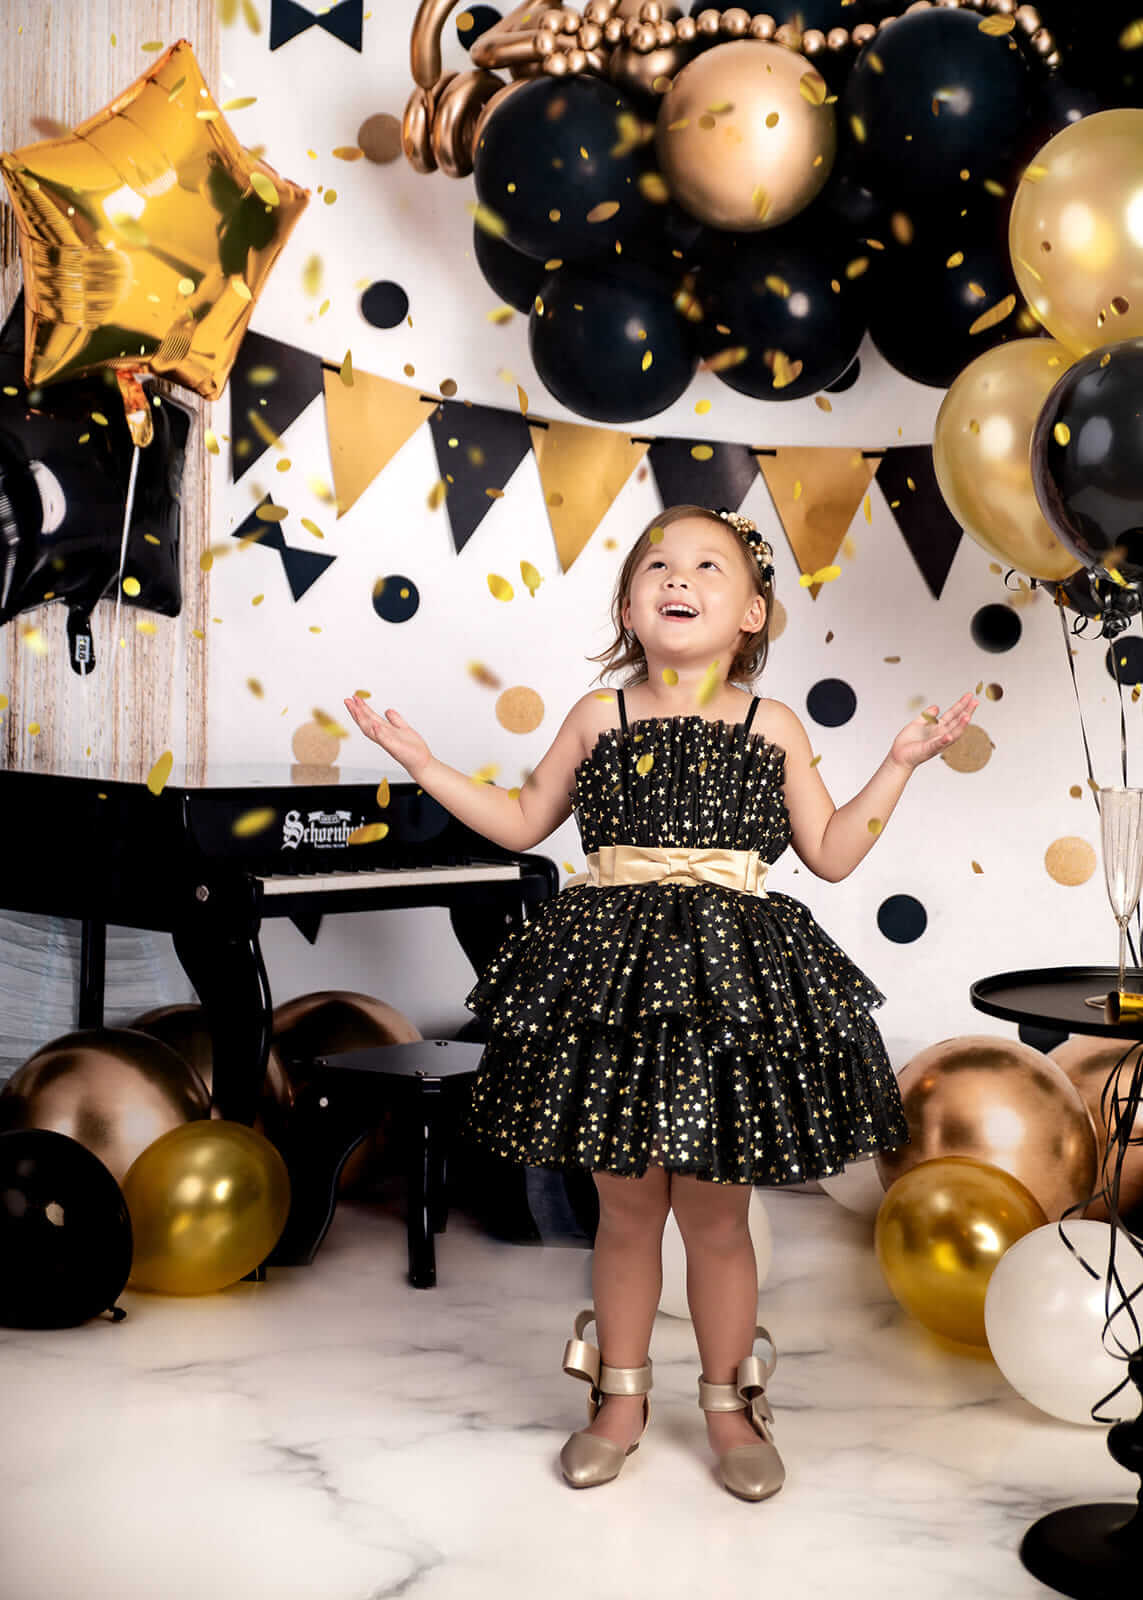 Kate Cake Smash Gold Black Balloons Backdrop Designed by Rose Abbas